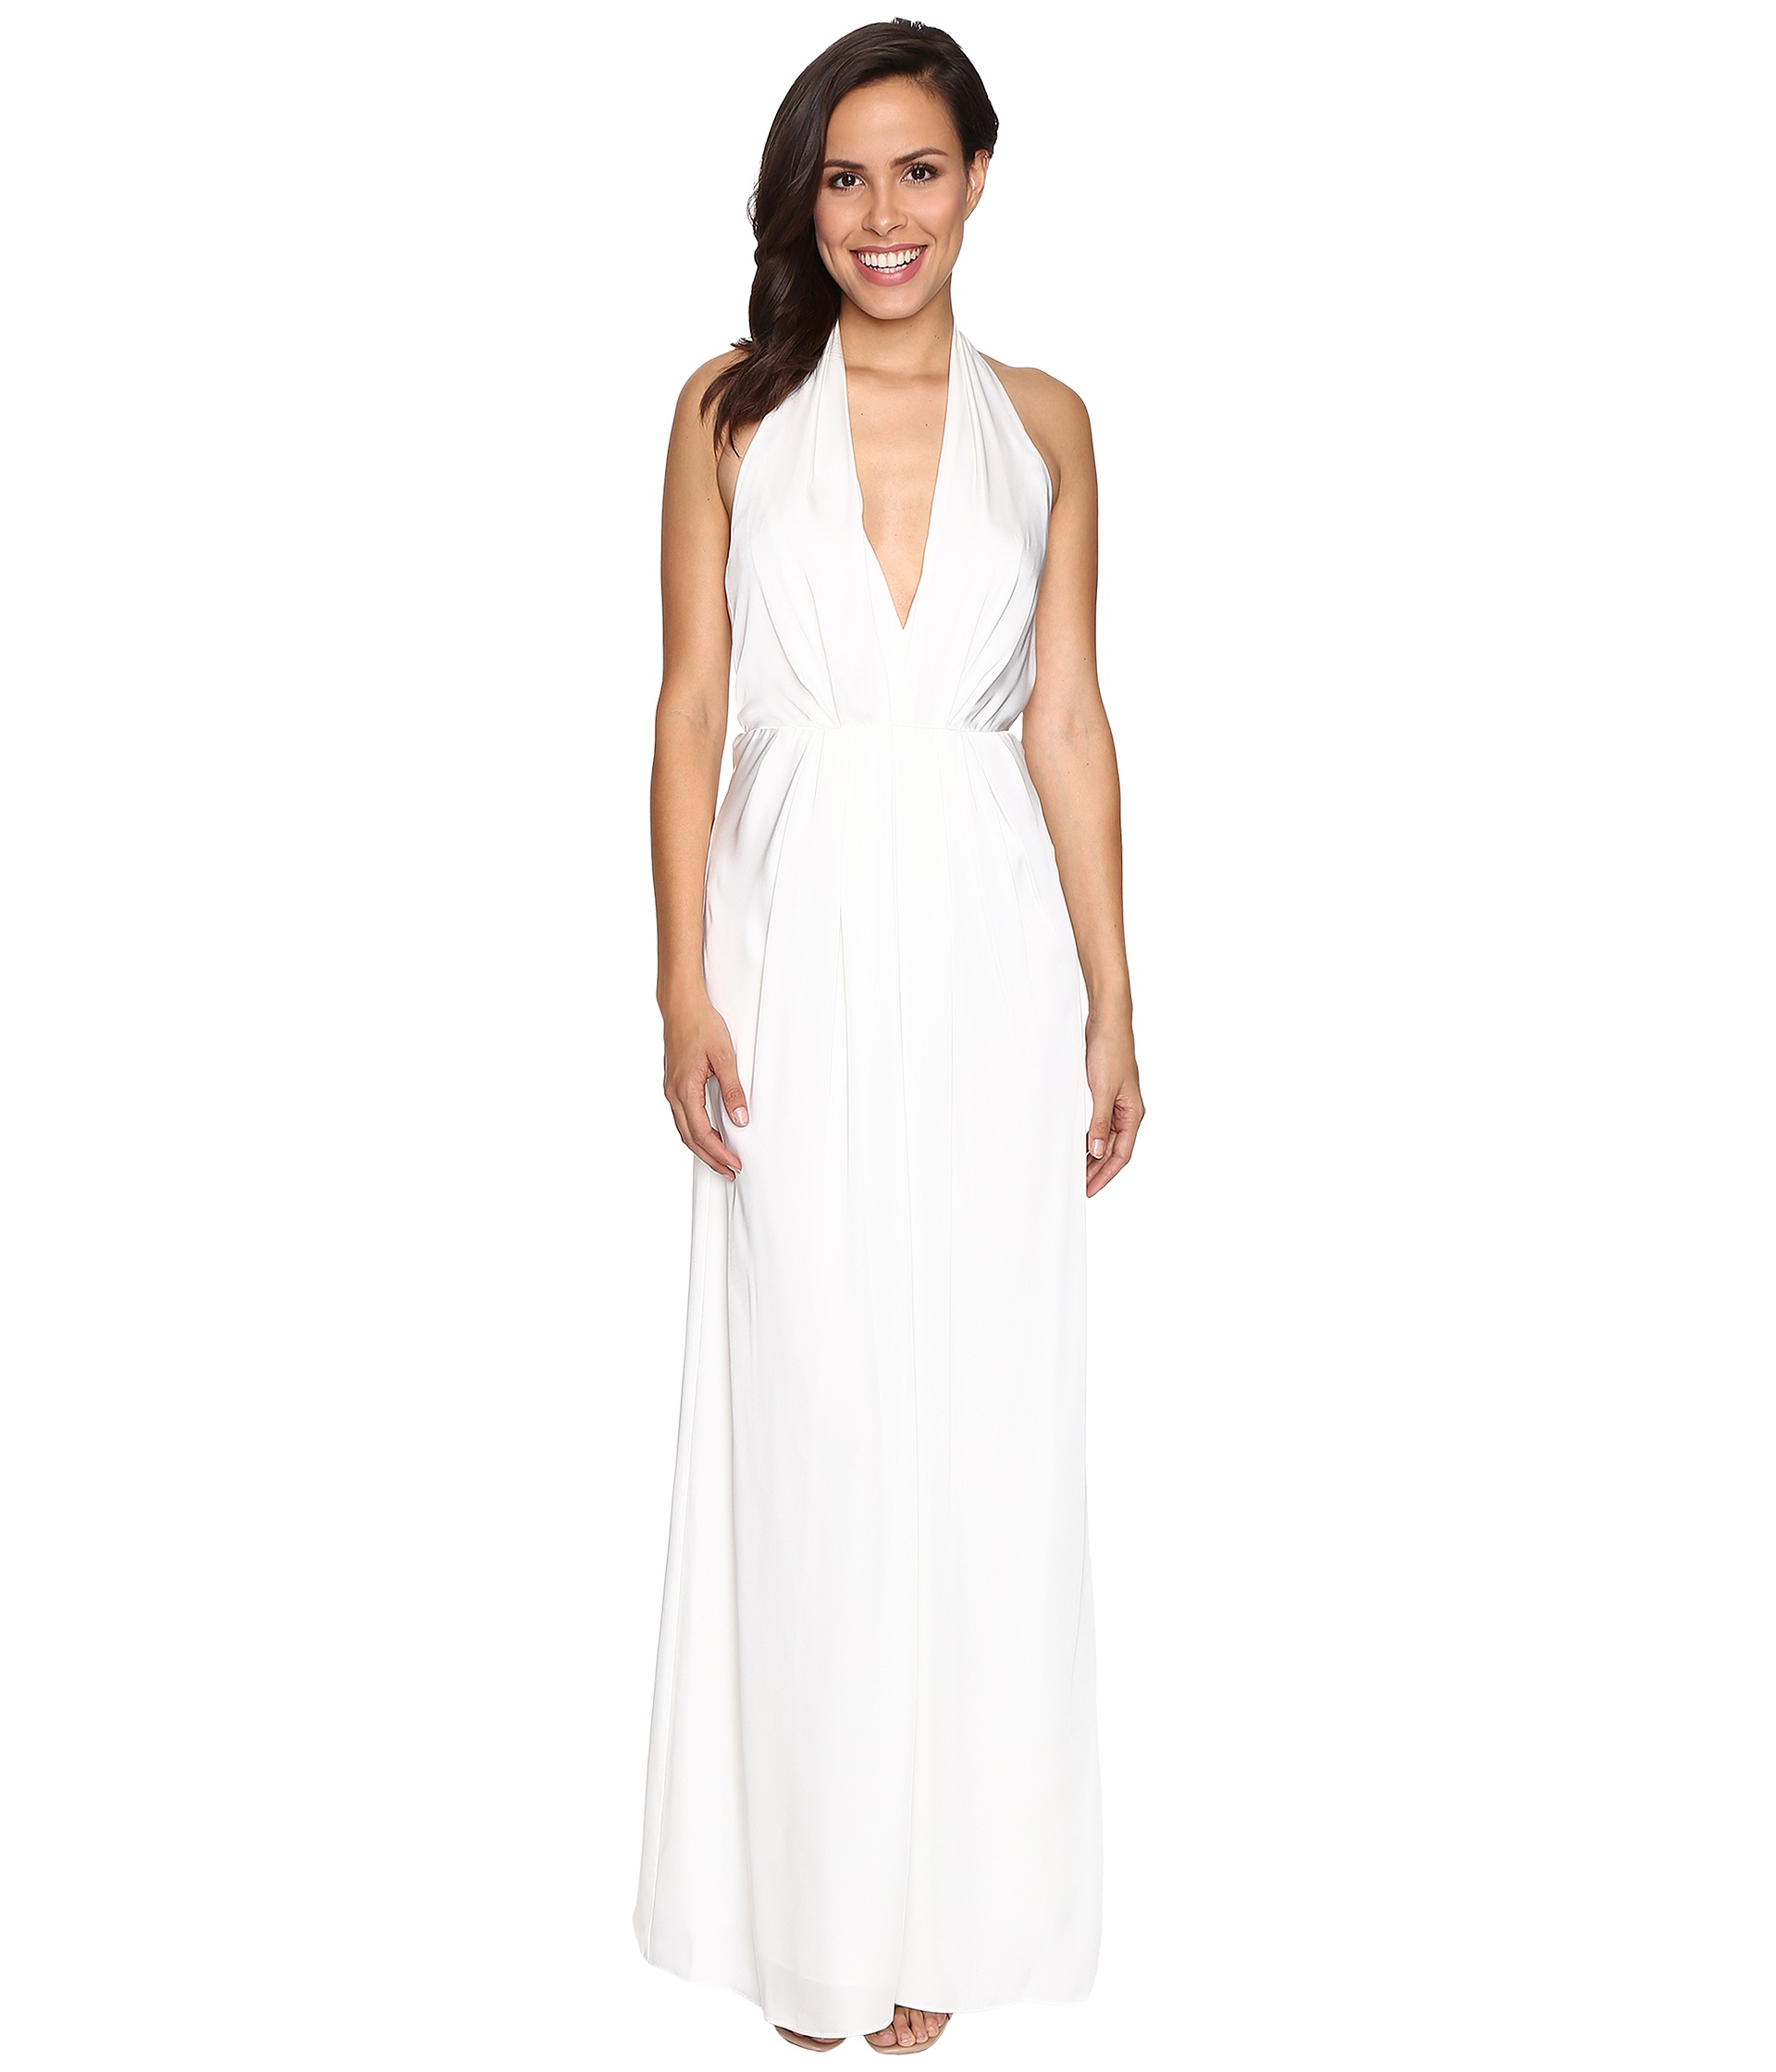 White Halter Dress- Clothing- White - Shipped Free at Zappos